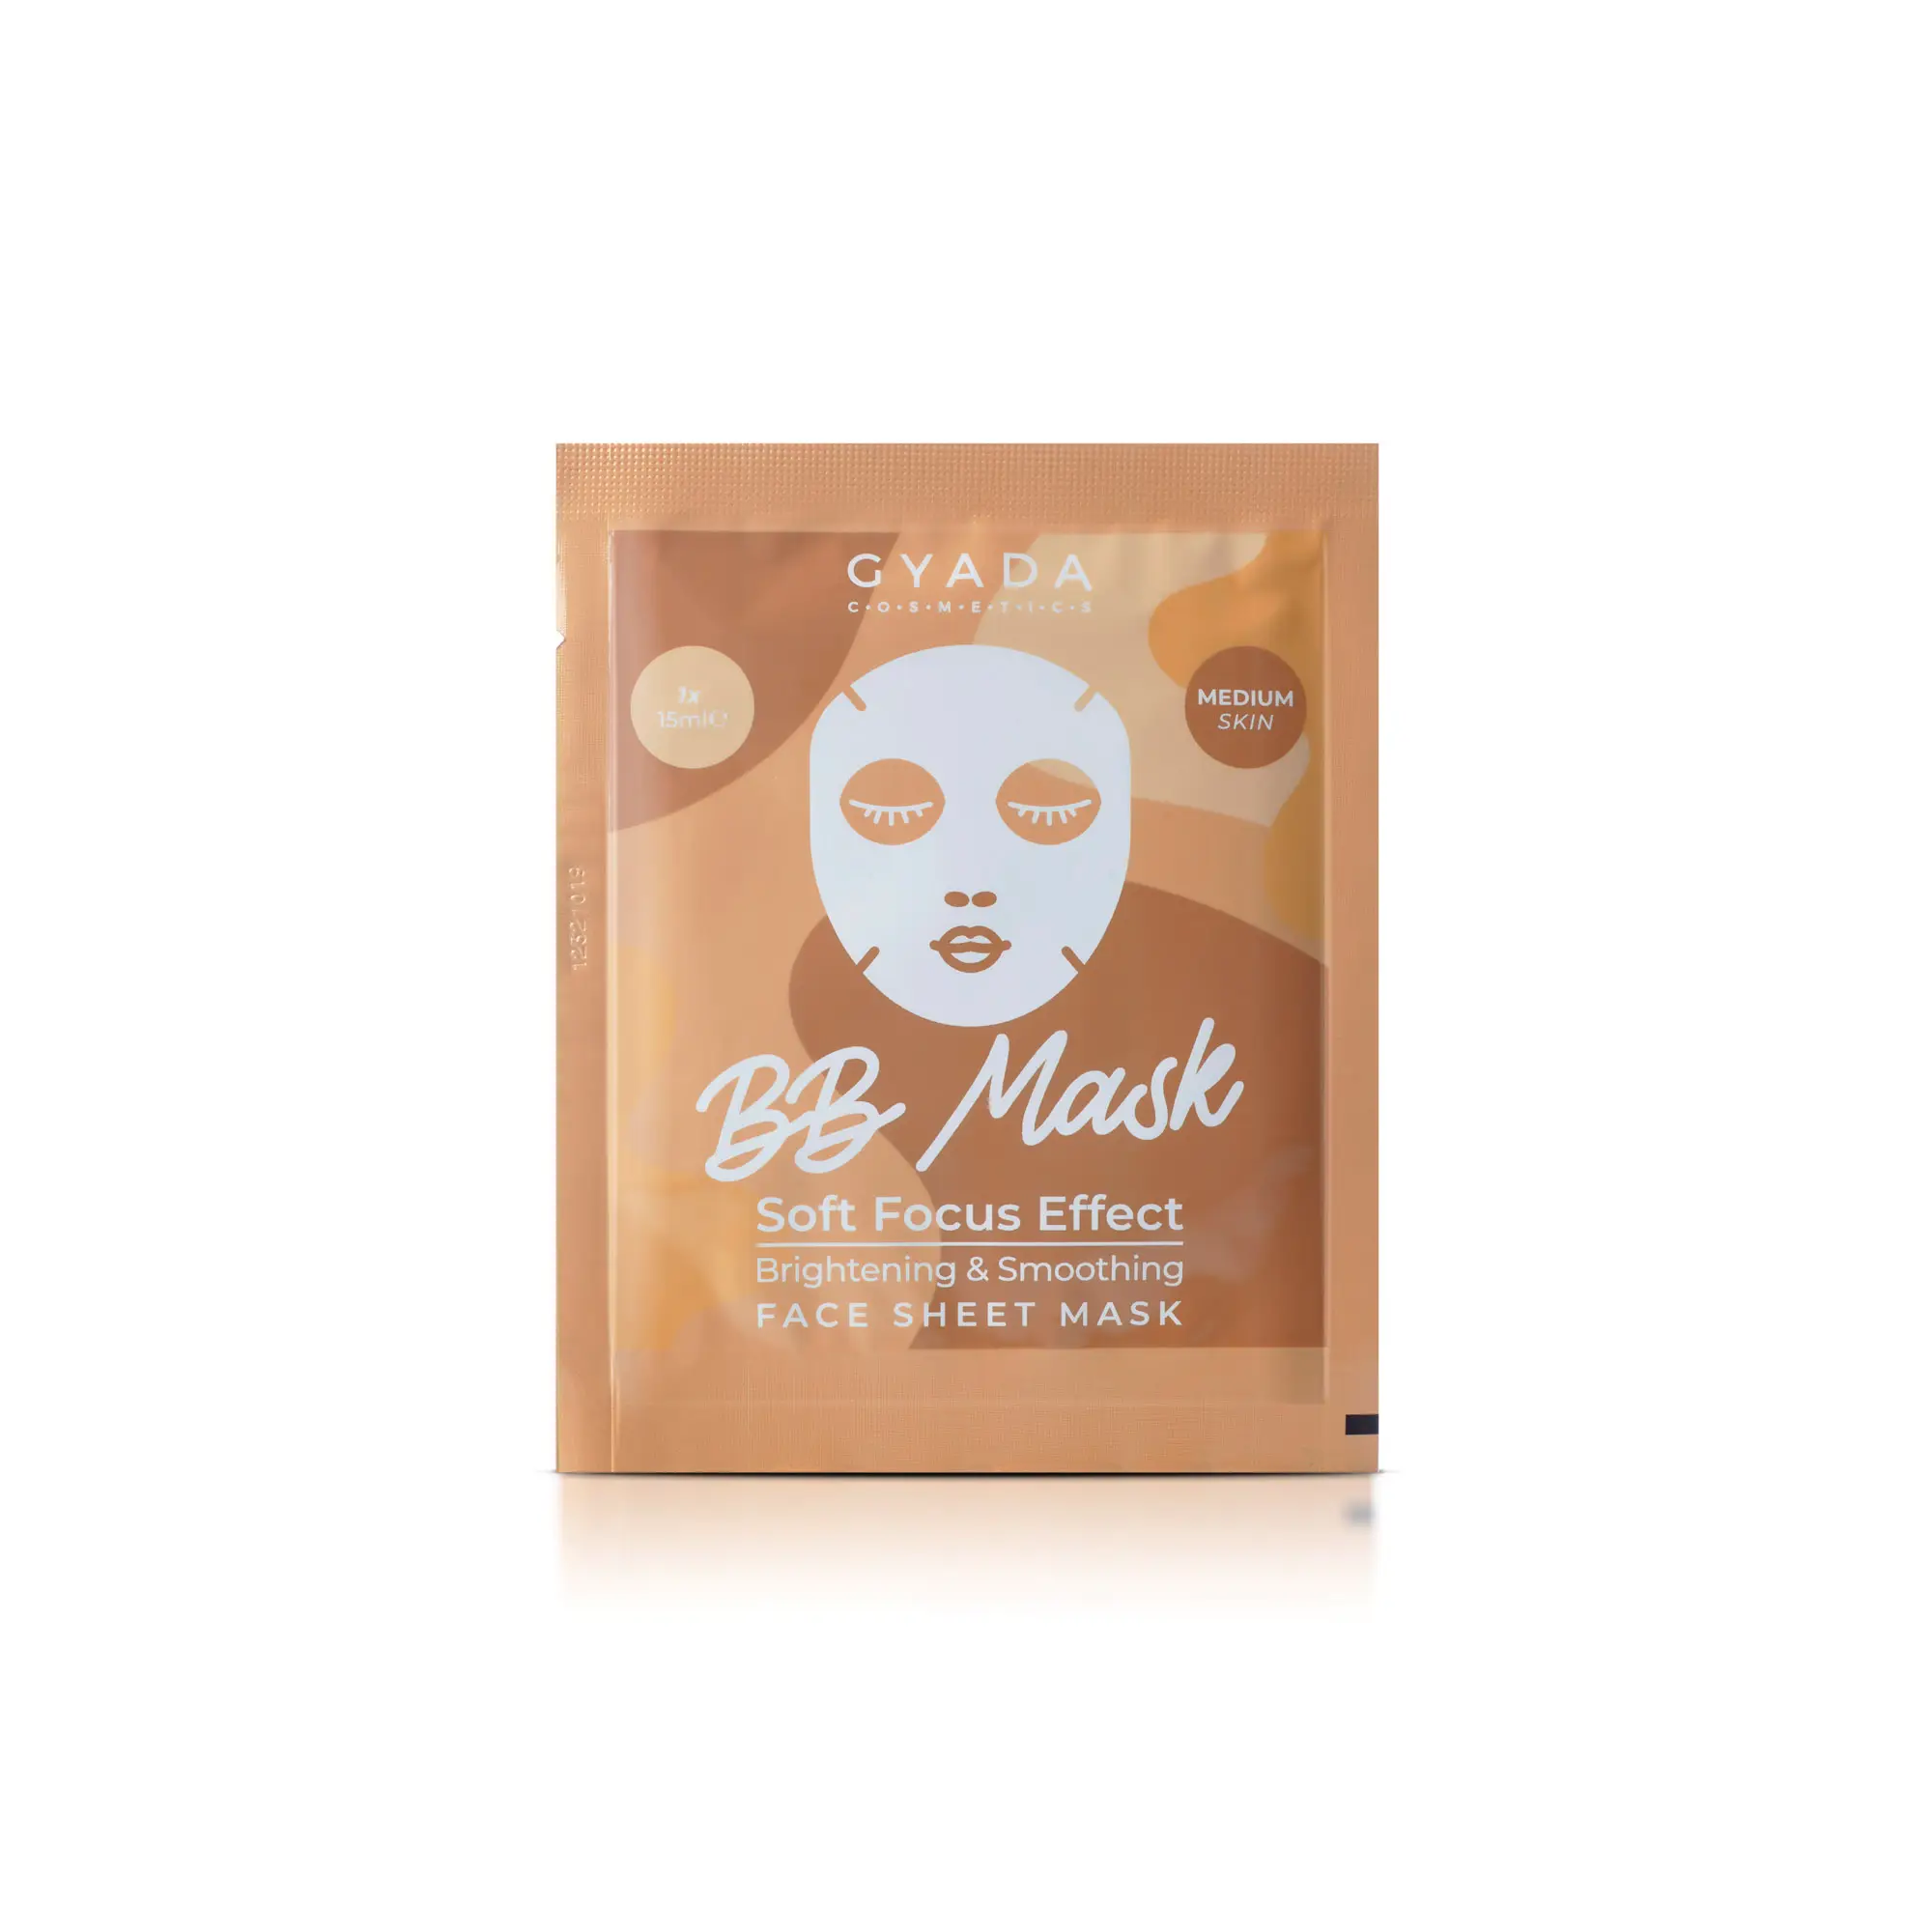 Italian Gyada Beauty Facial Blemish Control Bb Face Moisturizer Mask - Brightening & Smoothing Sheet Mask Medium 15Ml